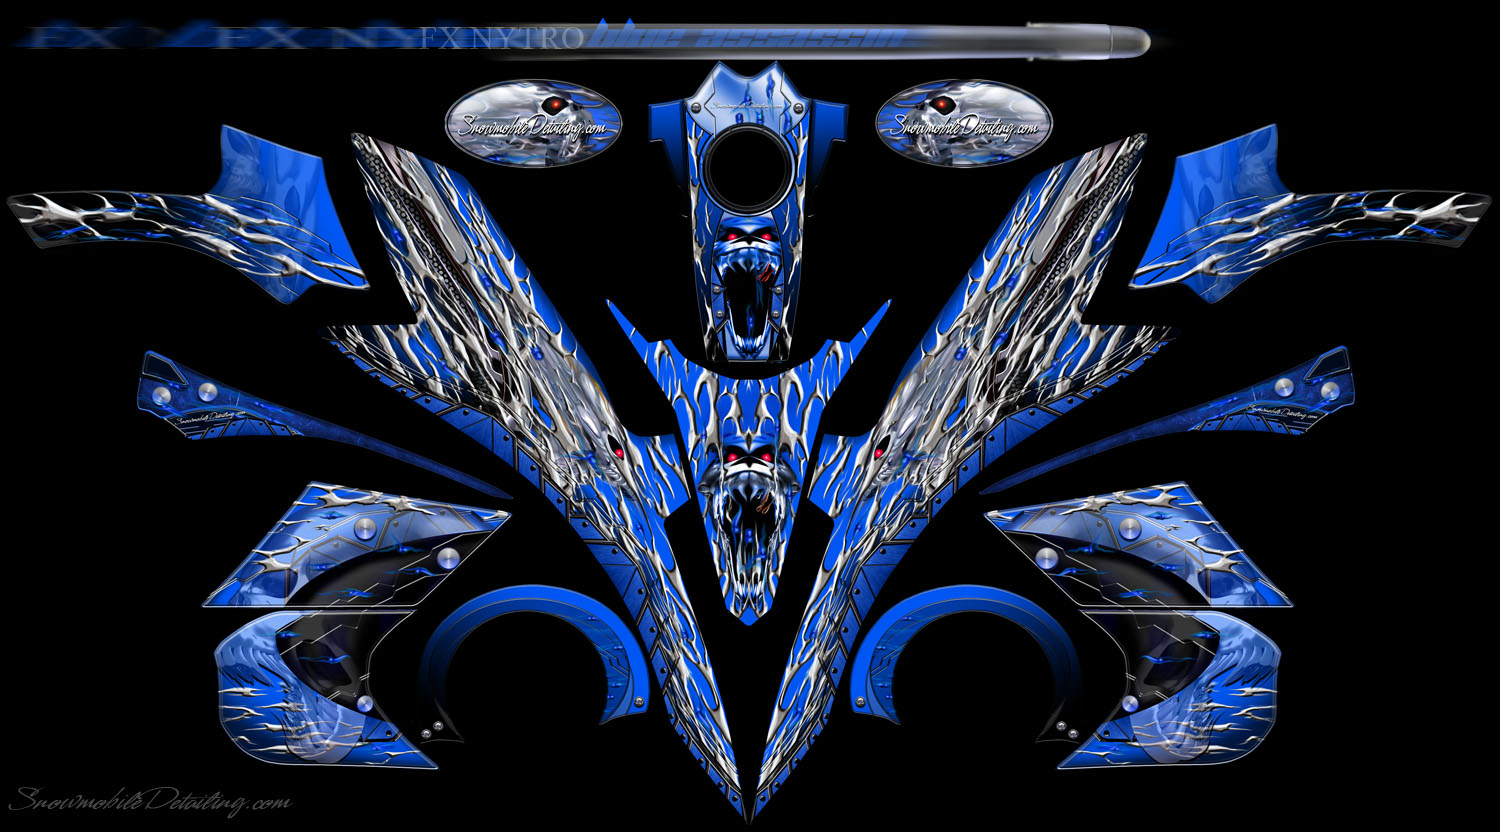 The Blue Assassin graphics for Yamaha Nytro